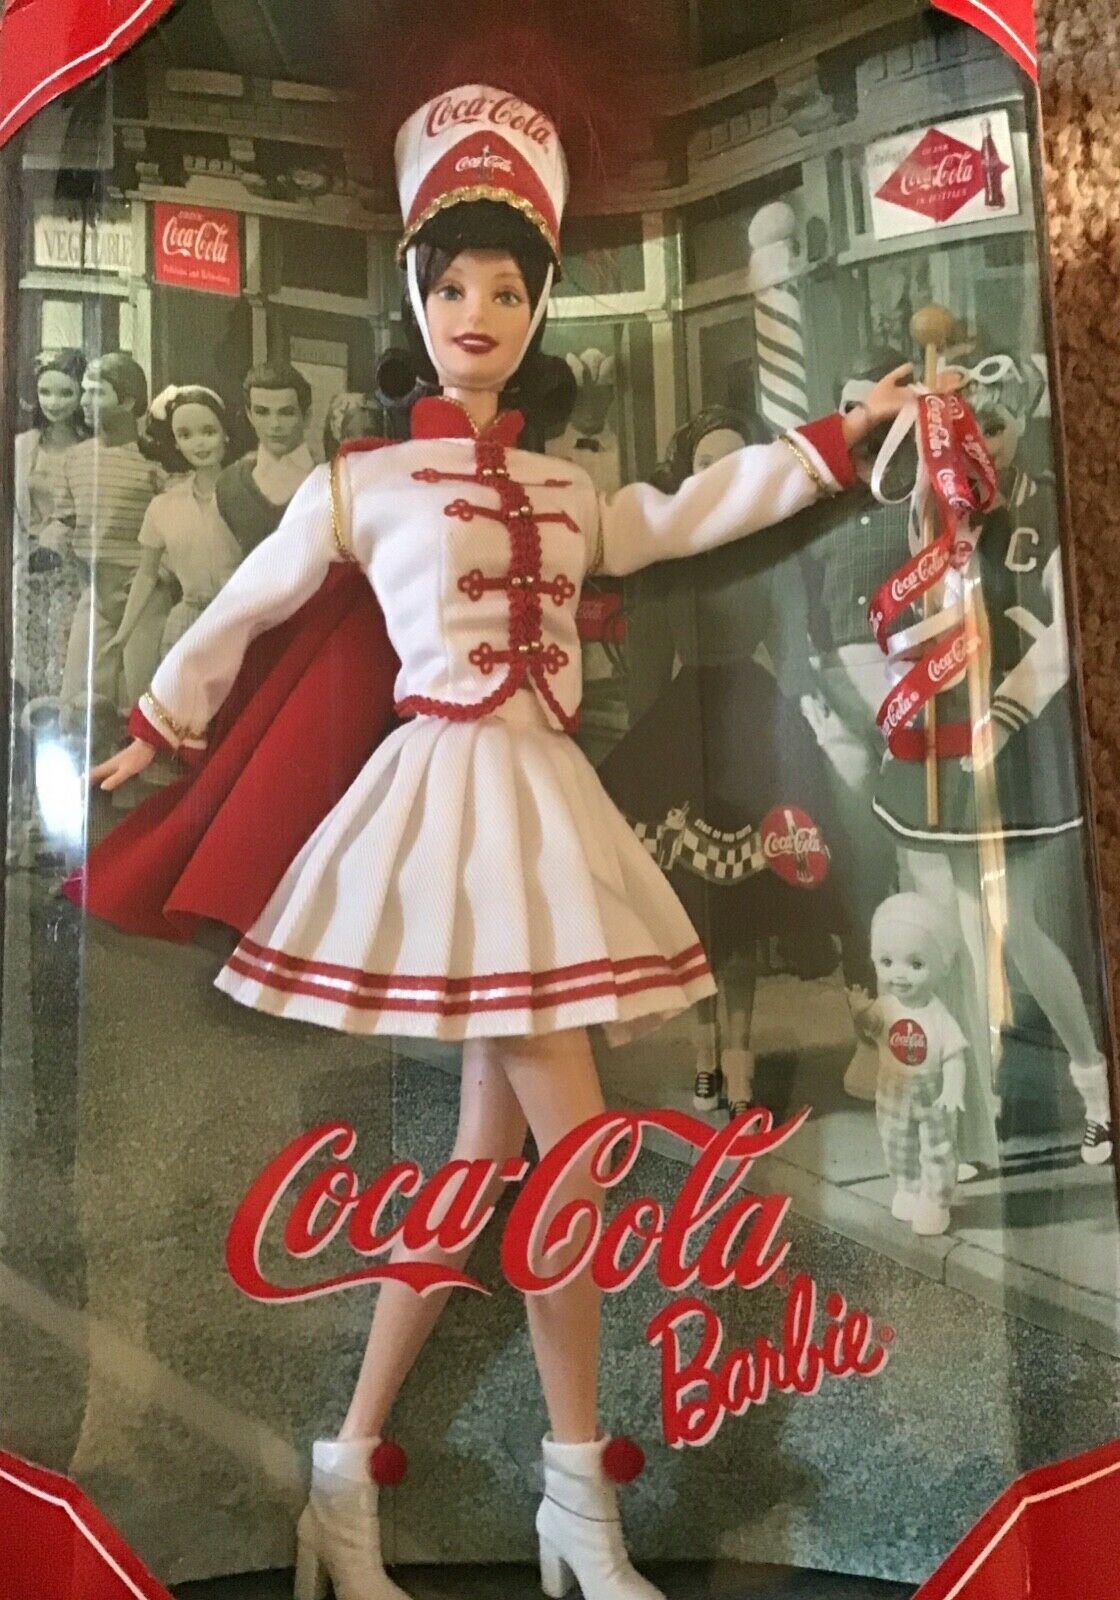 2001 Coca-cola Barbie - Majorette (box Corners A Little Worn)